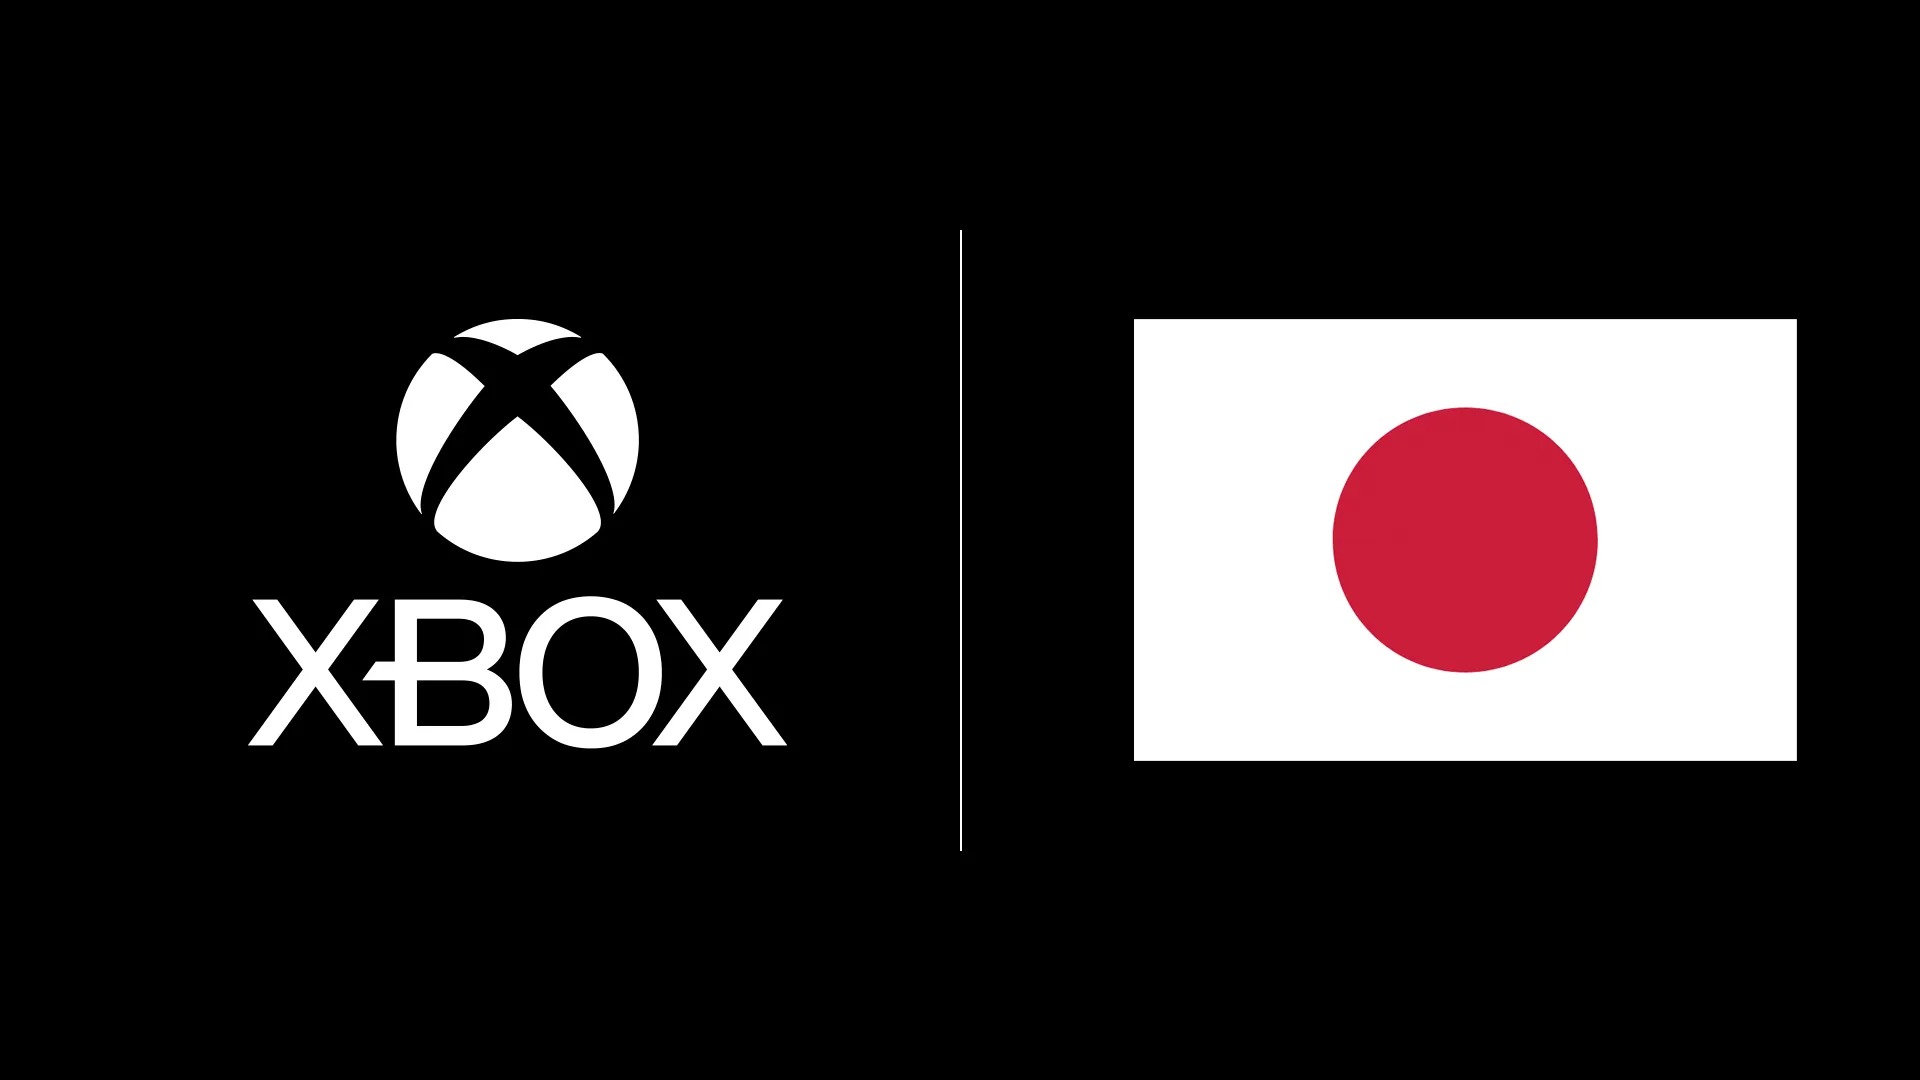 لوگوی ایکس باکس و پرچم ژاپن در کنار هم